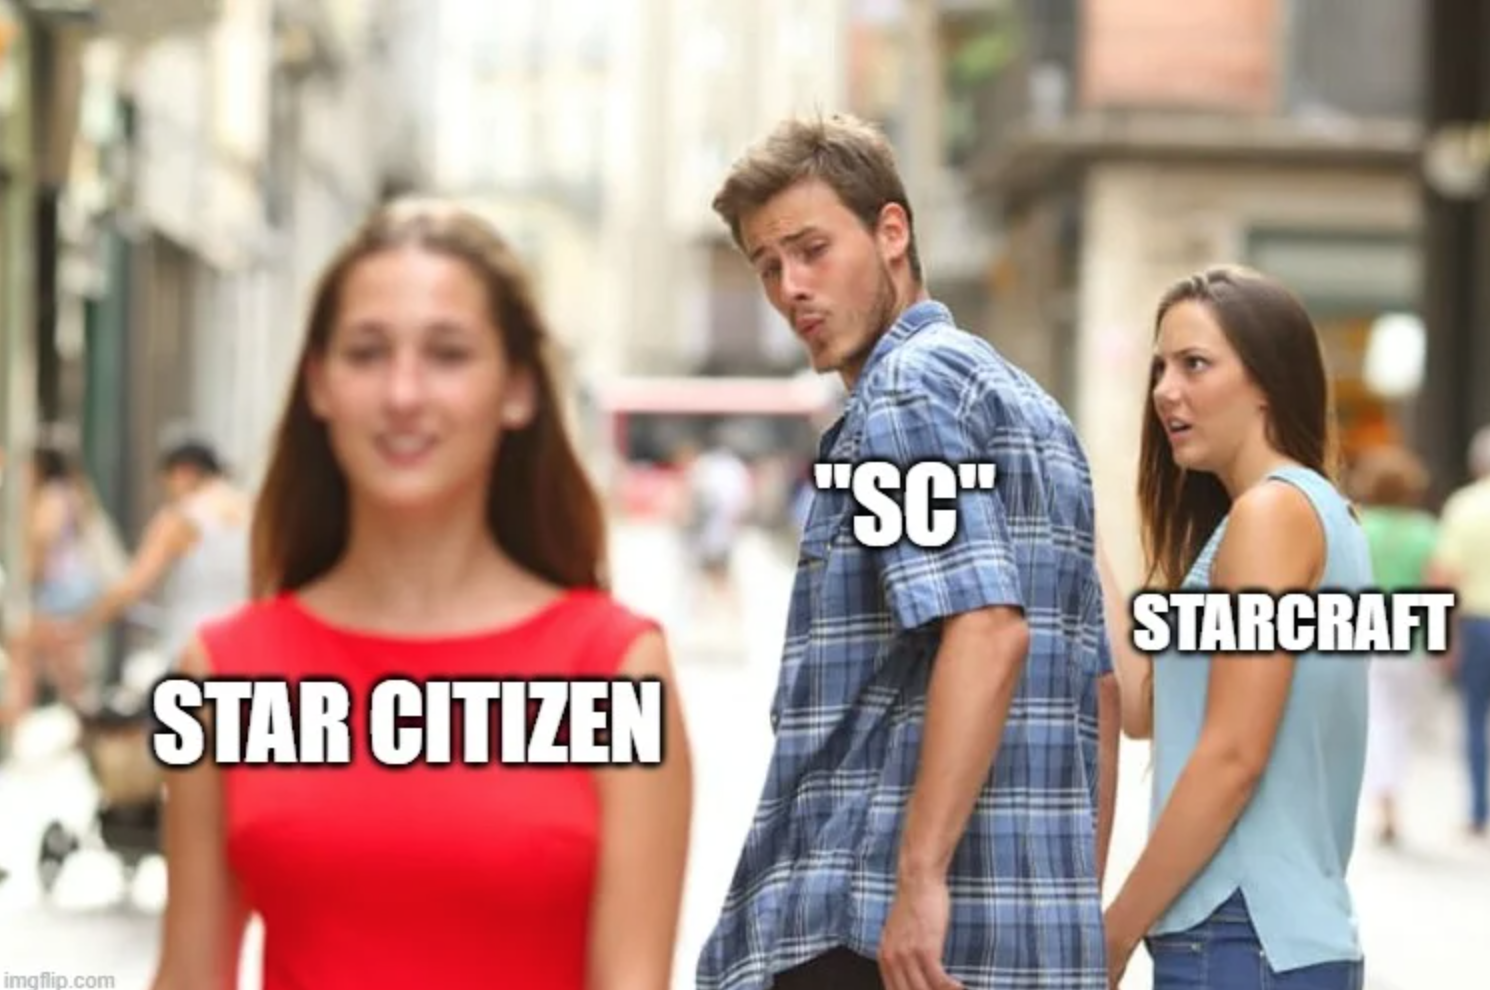 funny gaming memes - 2020 planner meme - "Sc" Starcraft Star Citizen mon.com